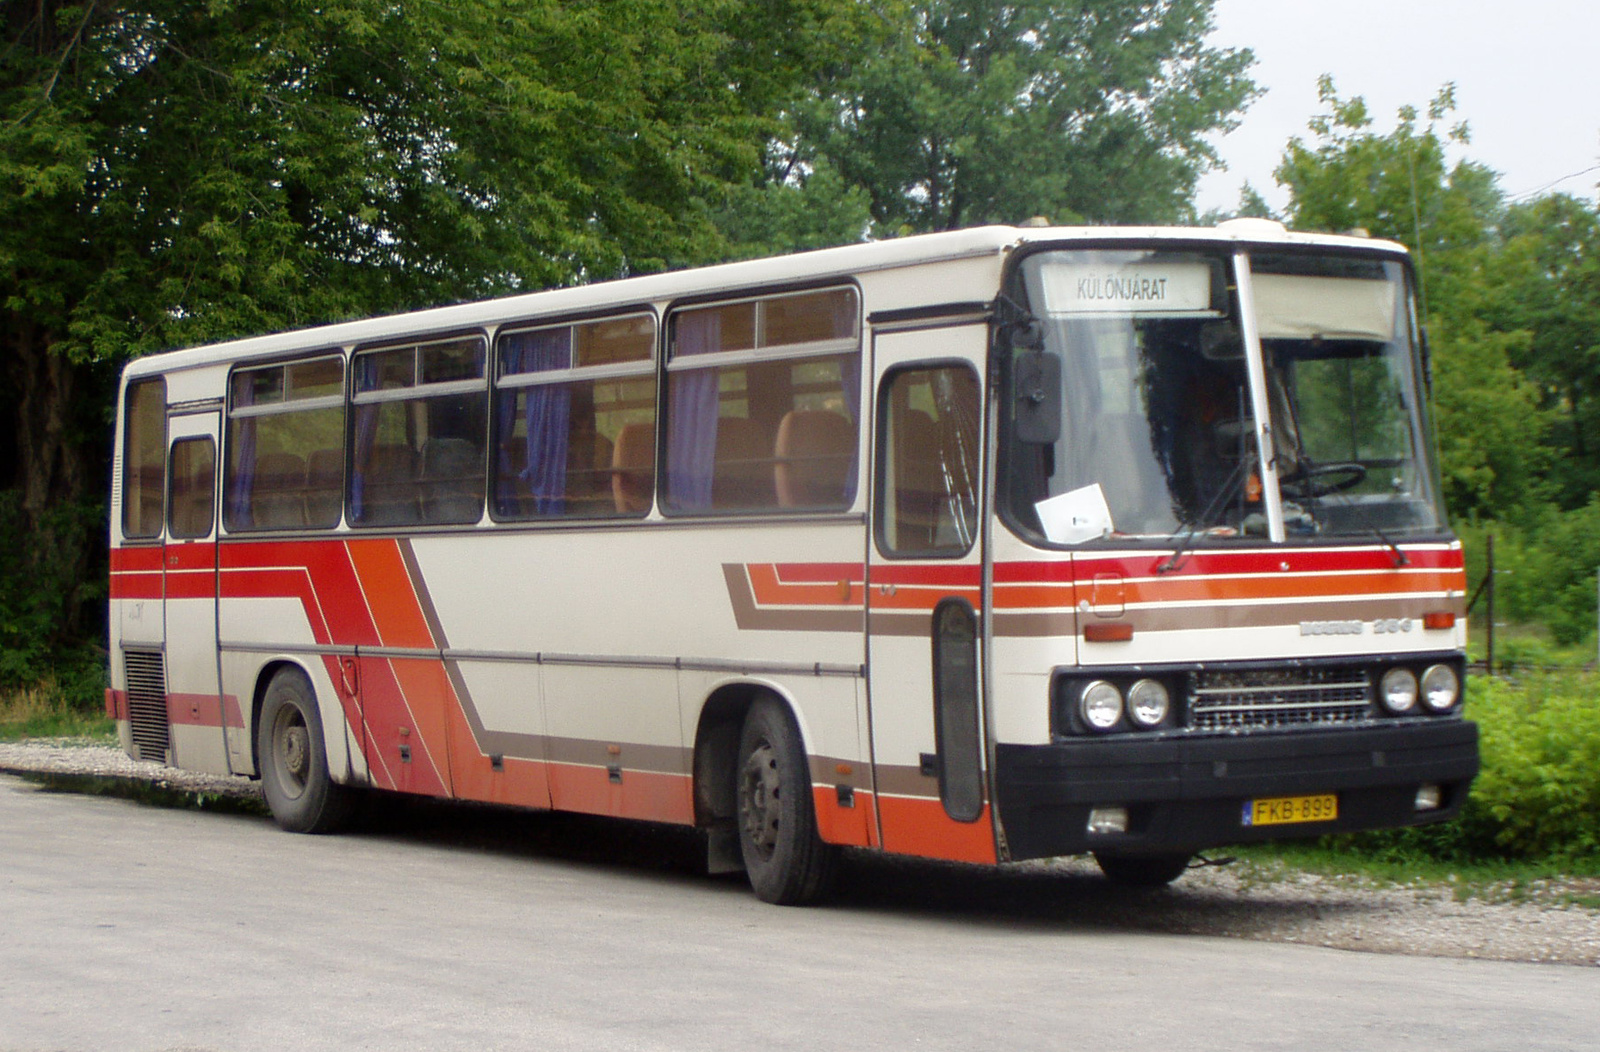 FKB-899